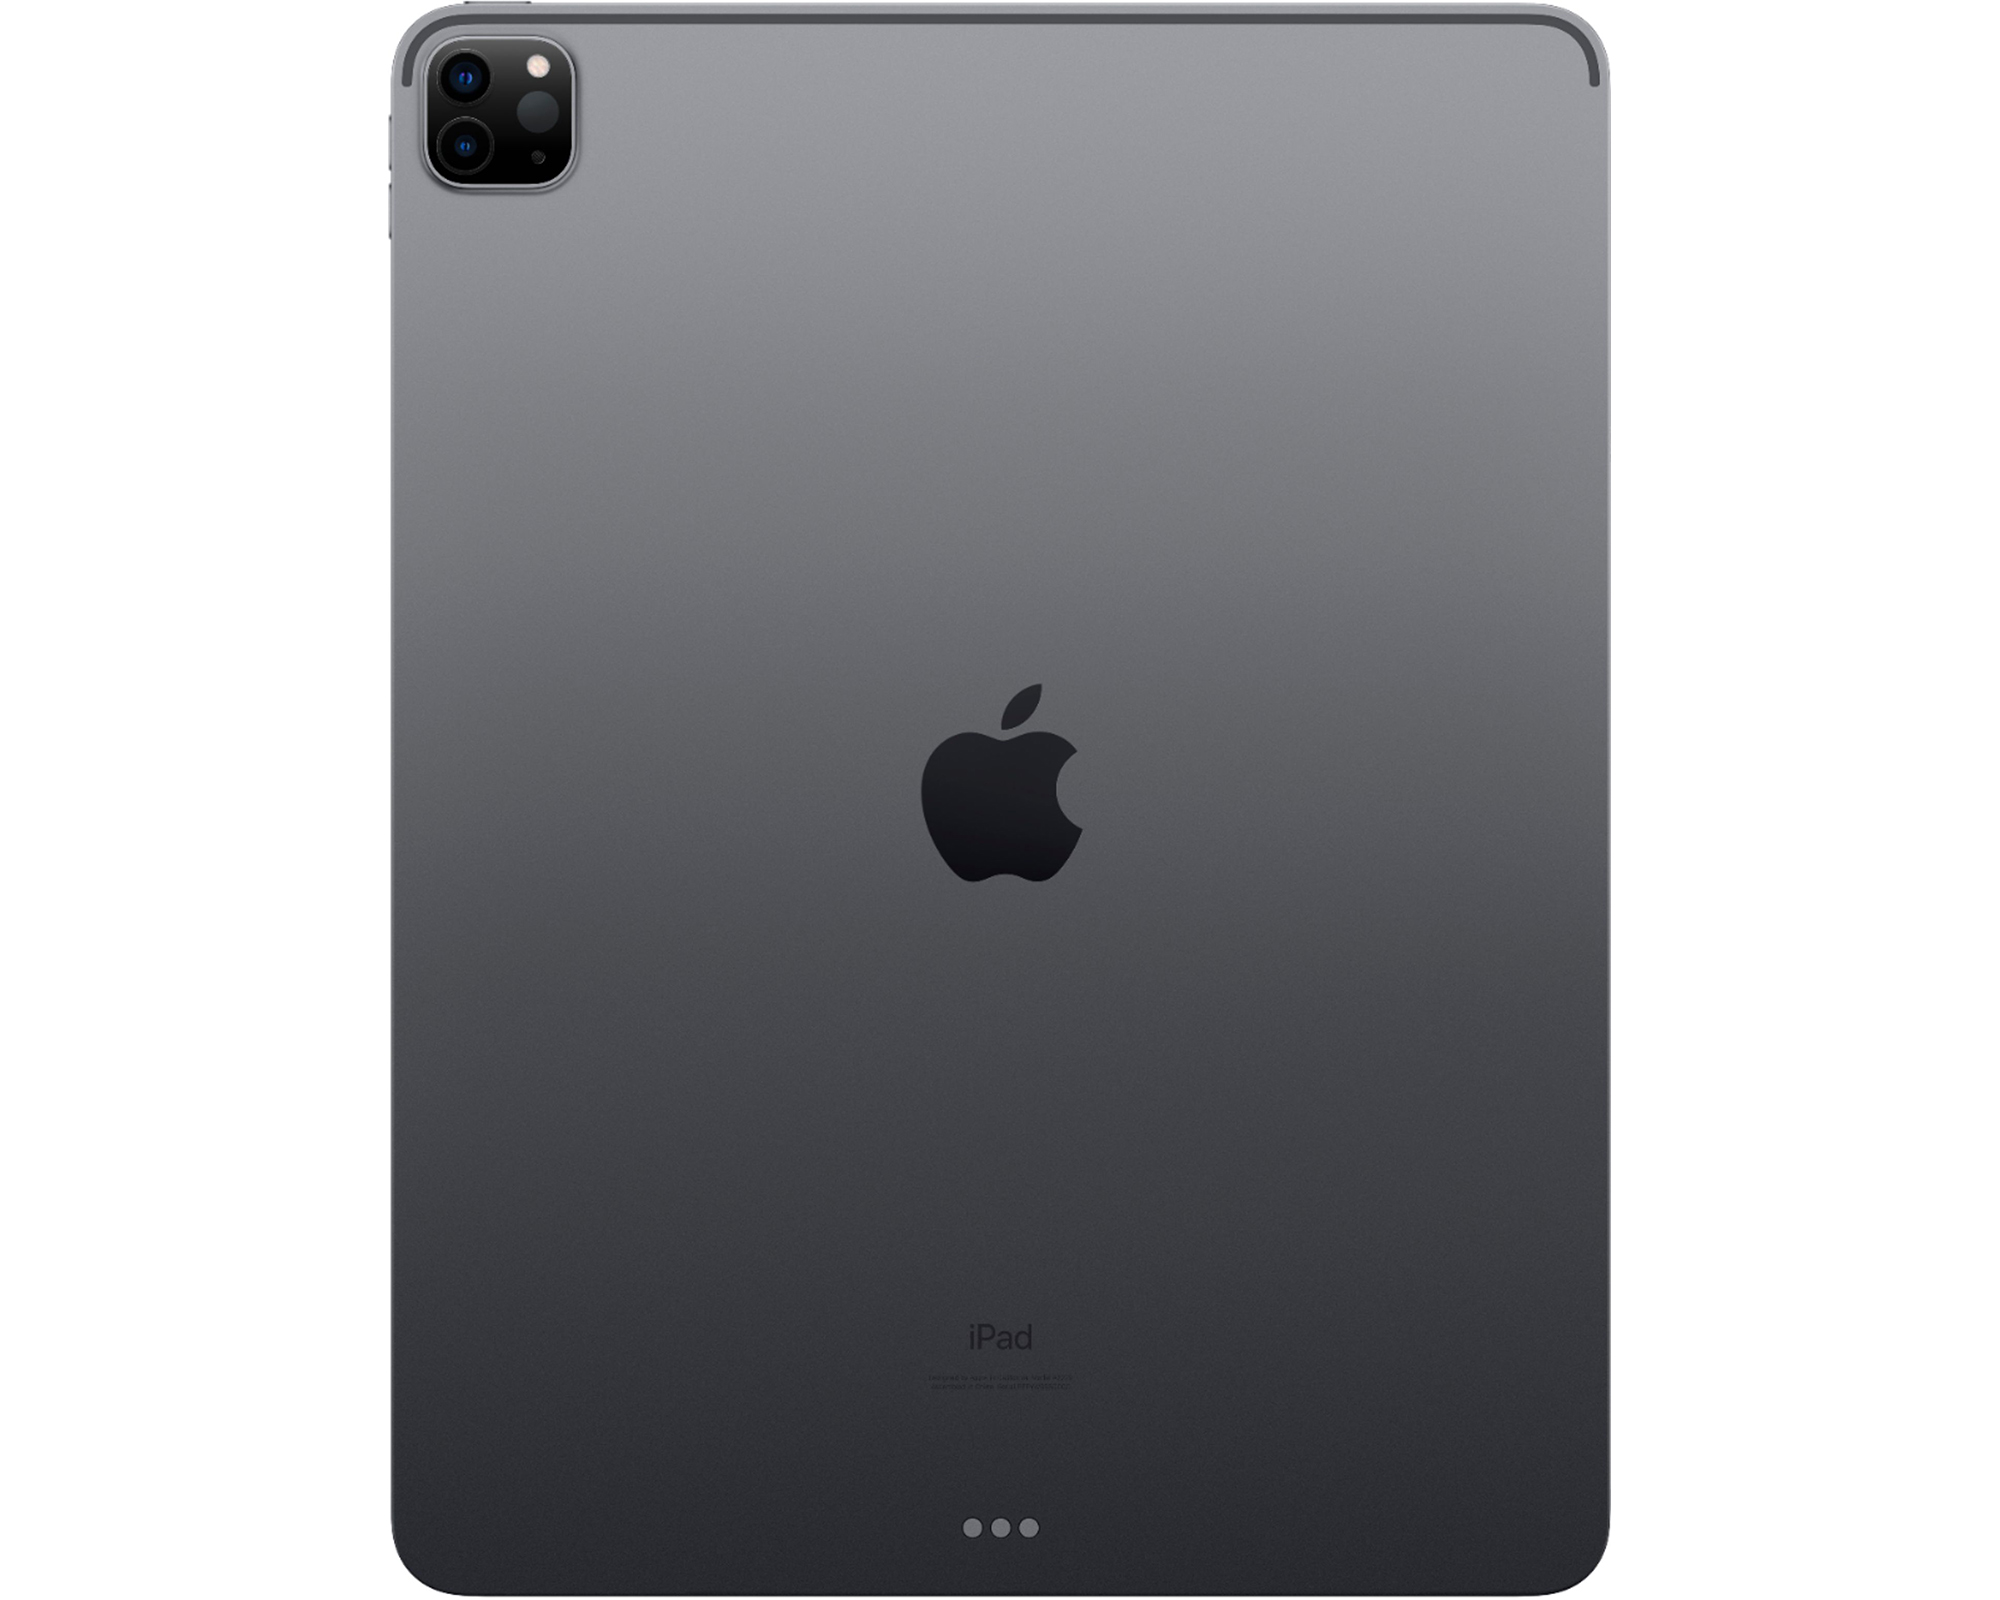 Apple 12.9-inch iPad Pro (2020) Wi-Fi 128GB - Space Gray - image 4 of 7